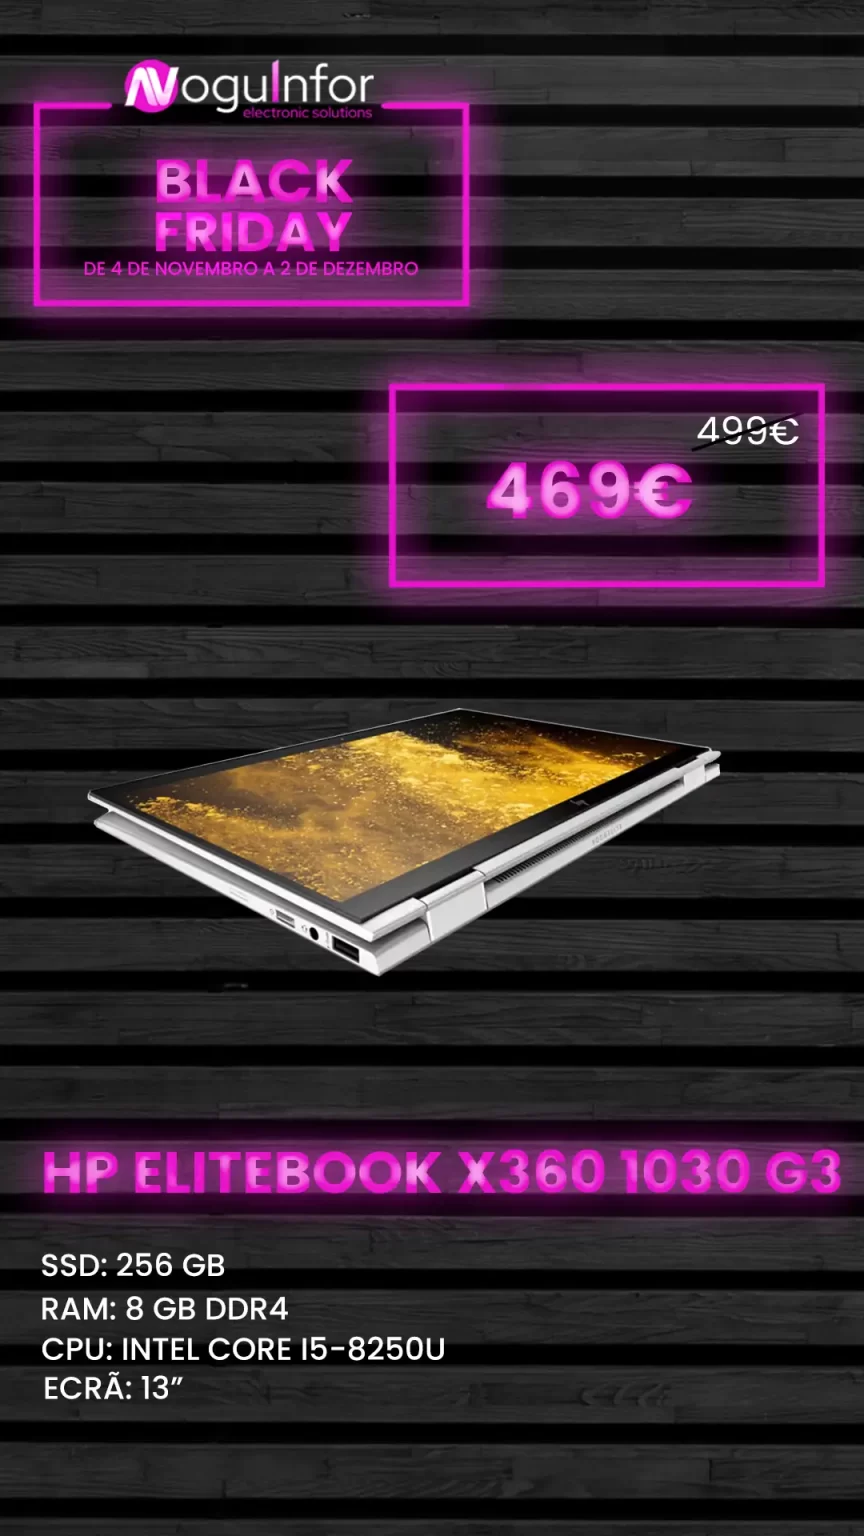 Blackfriday Portátil HP EliteBook x360 1030 G3 Noguinfor